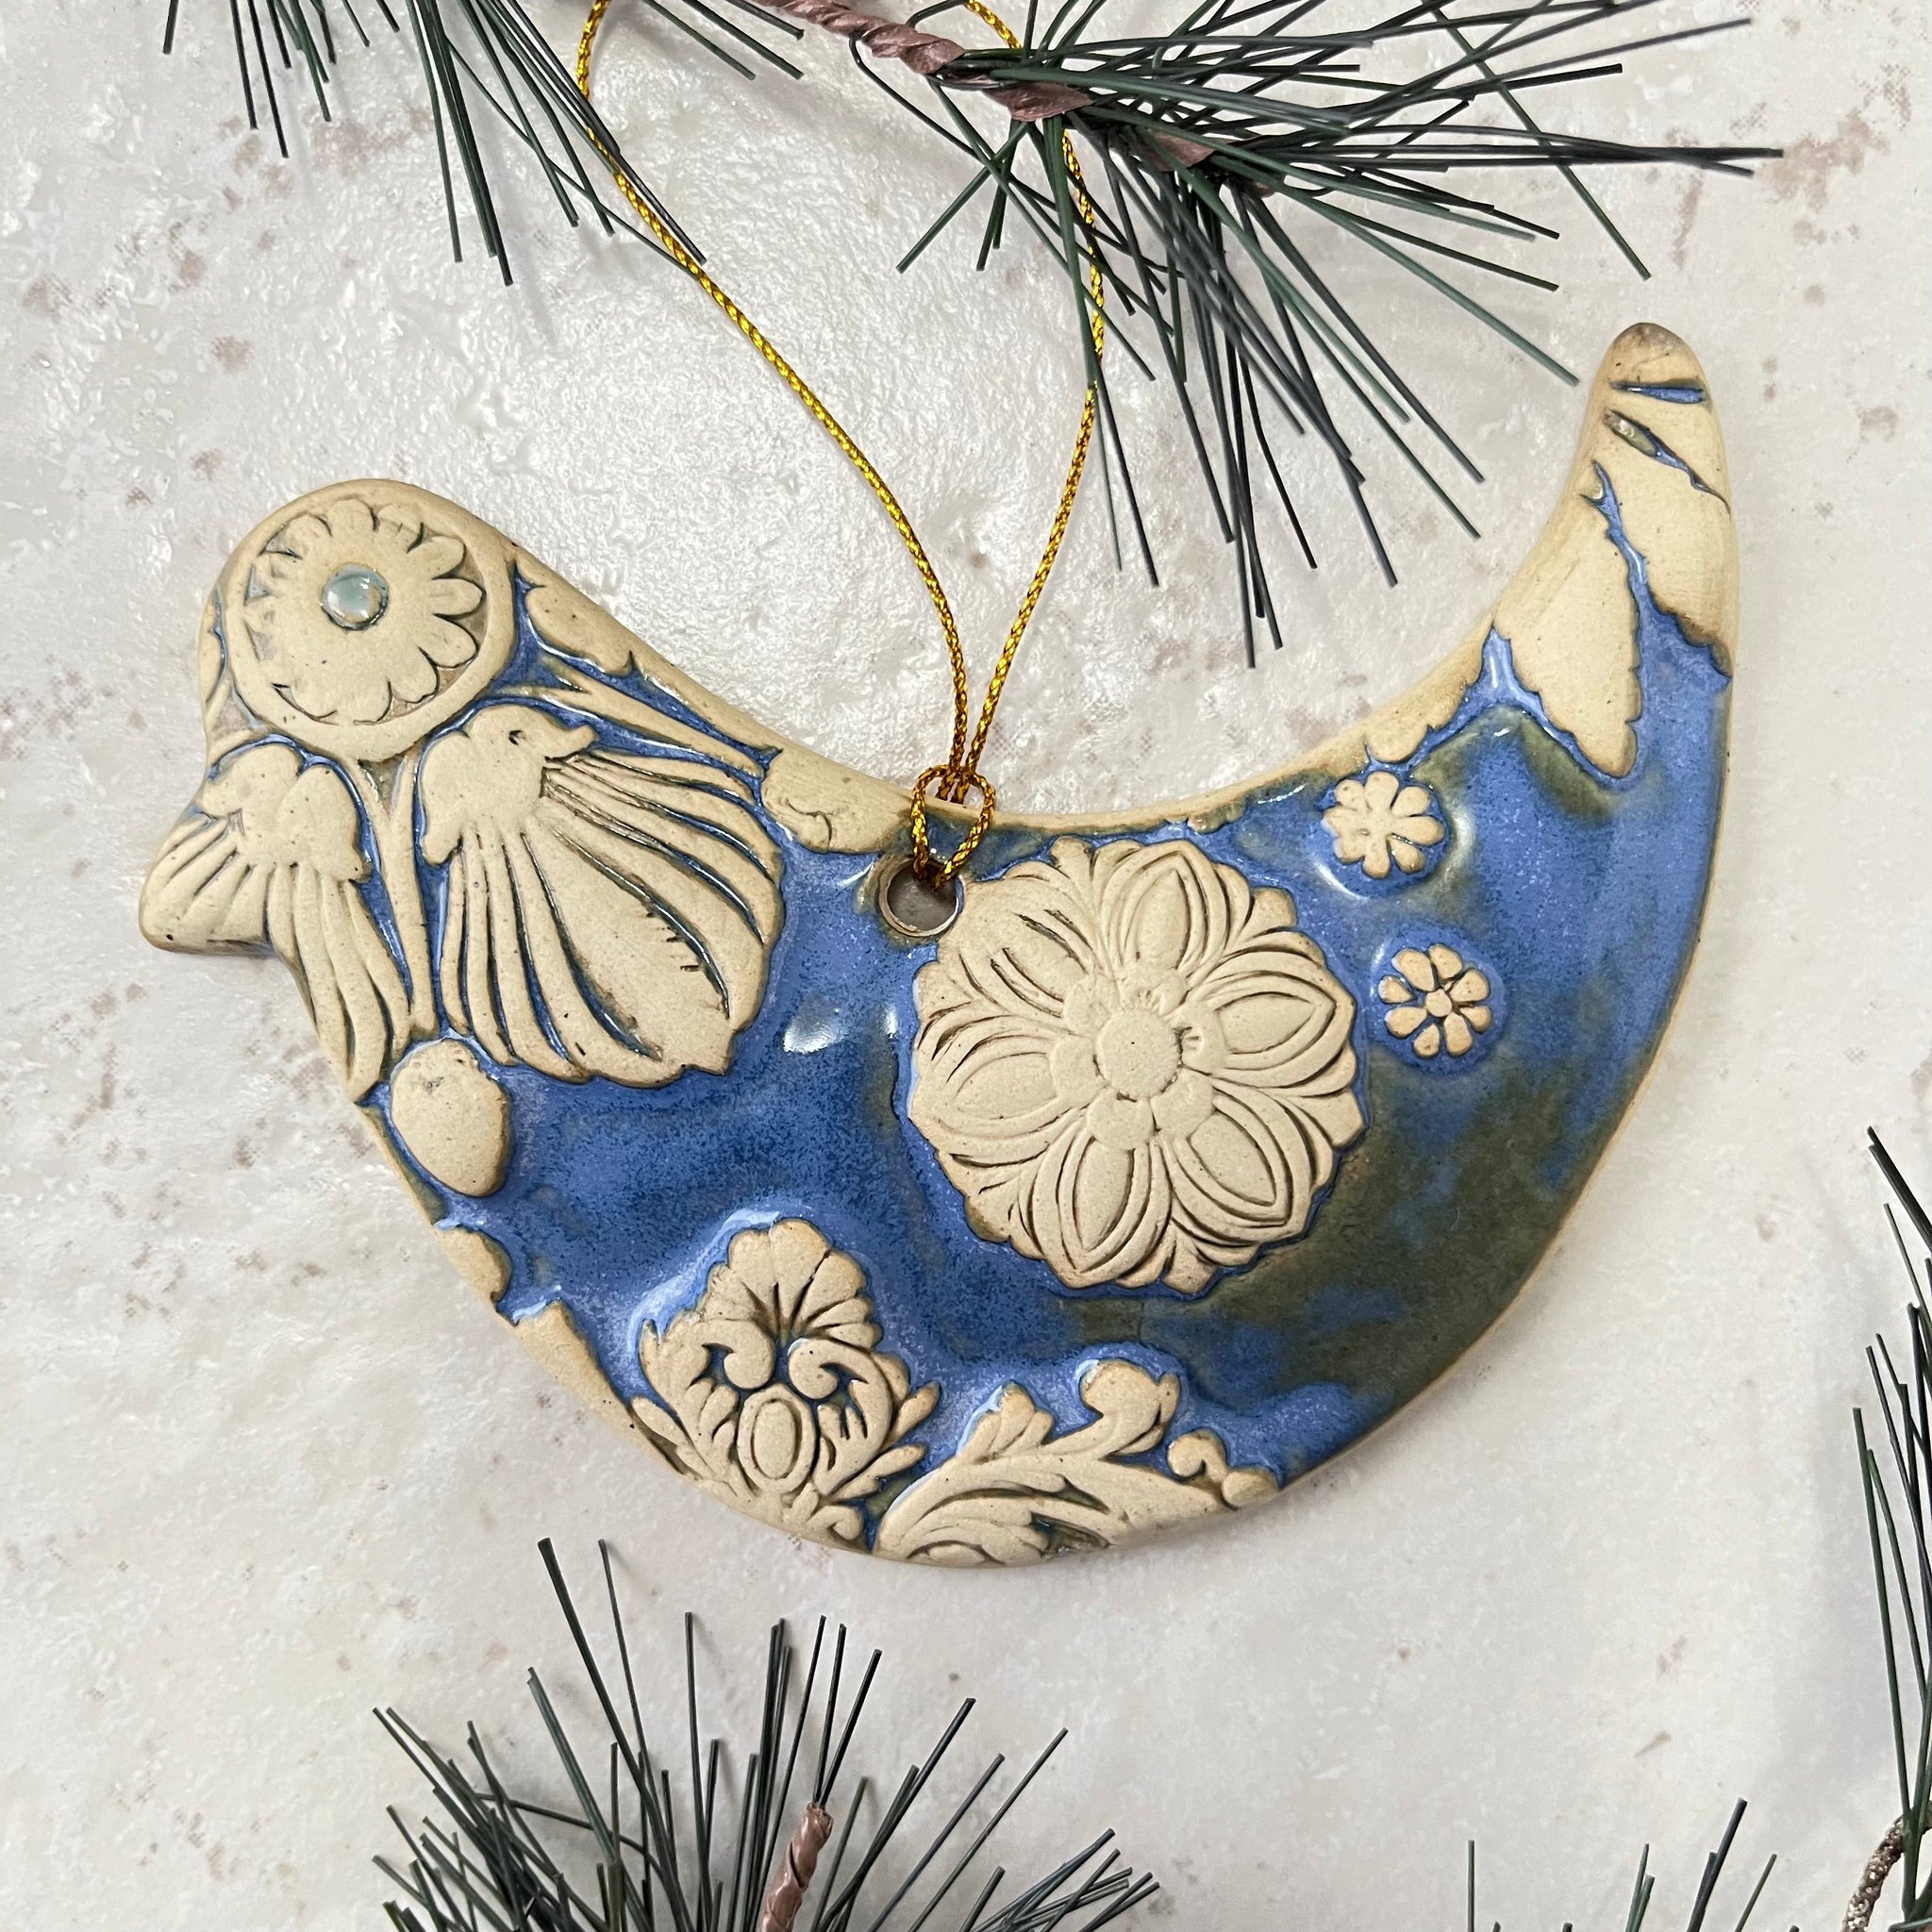 ZO1 Cornflower Blue Ceramic Peace Dove Ornament FREE U.S. SHIPPING on Orders over $200.00